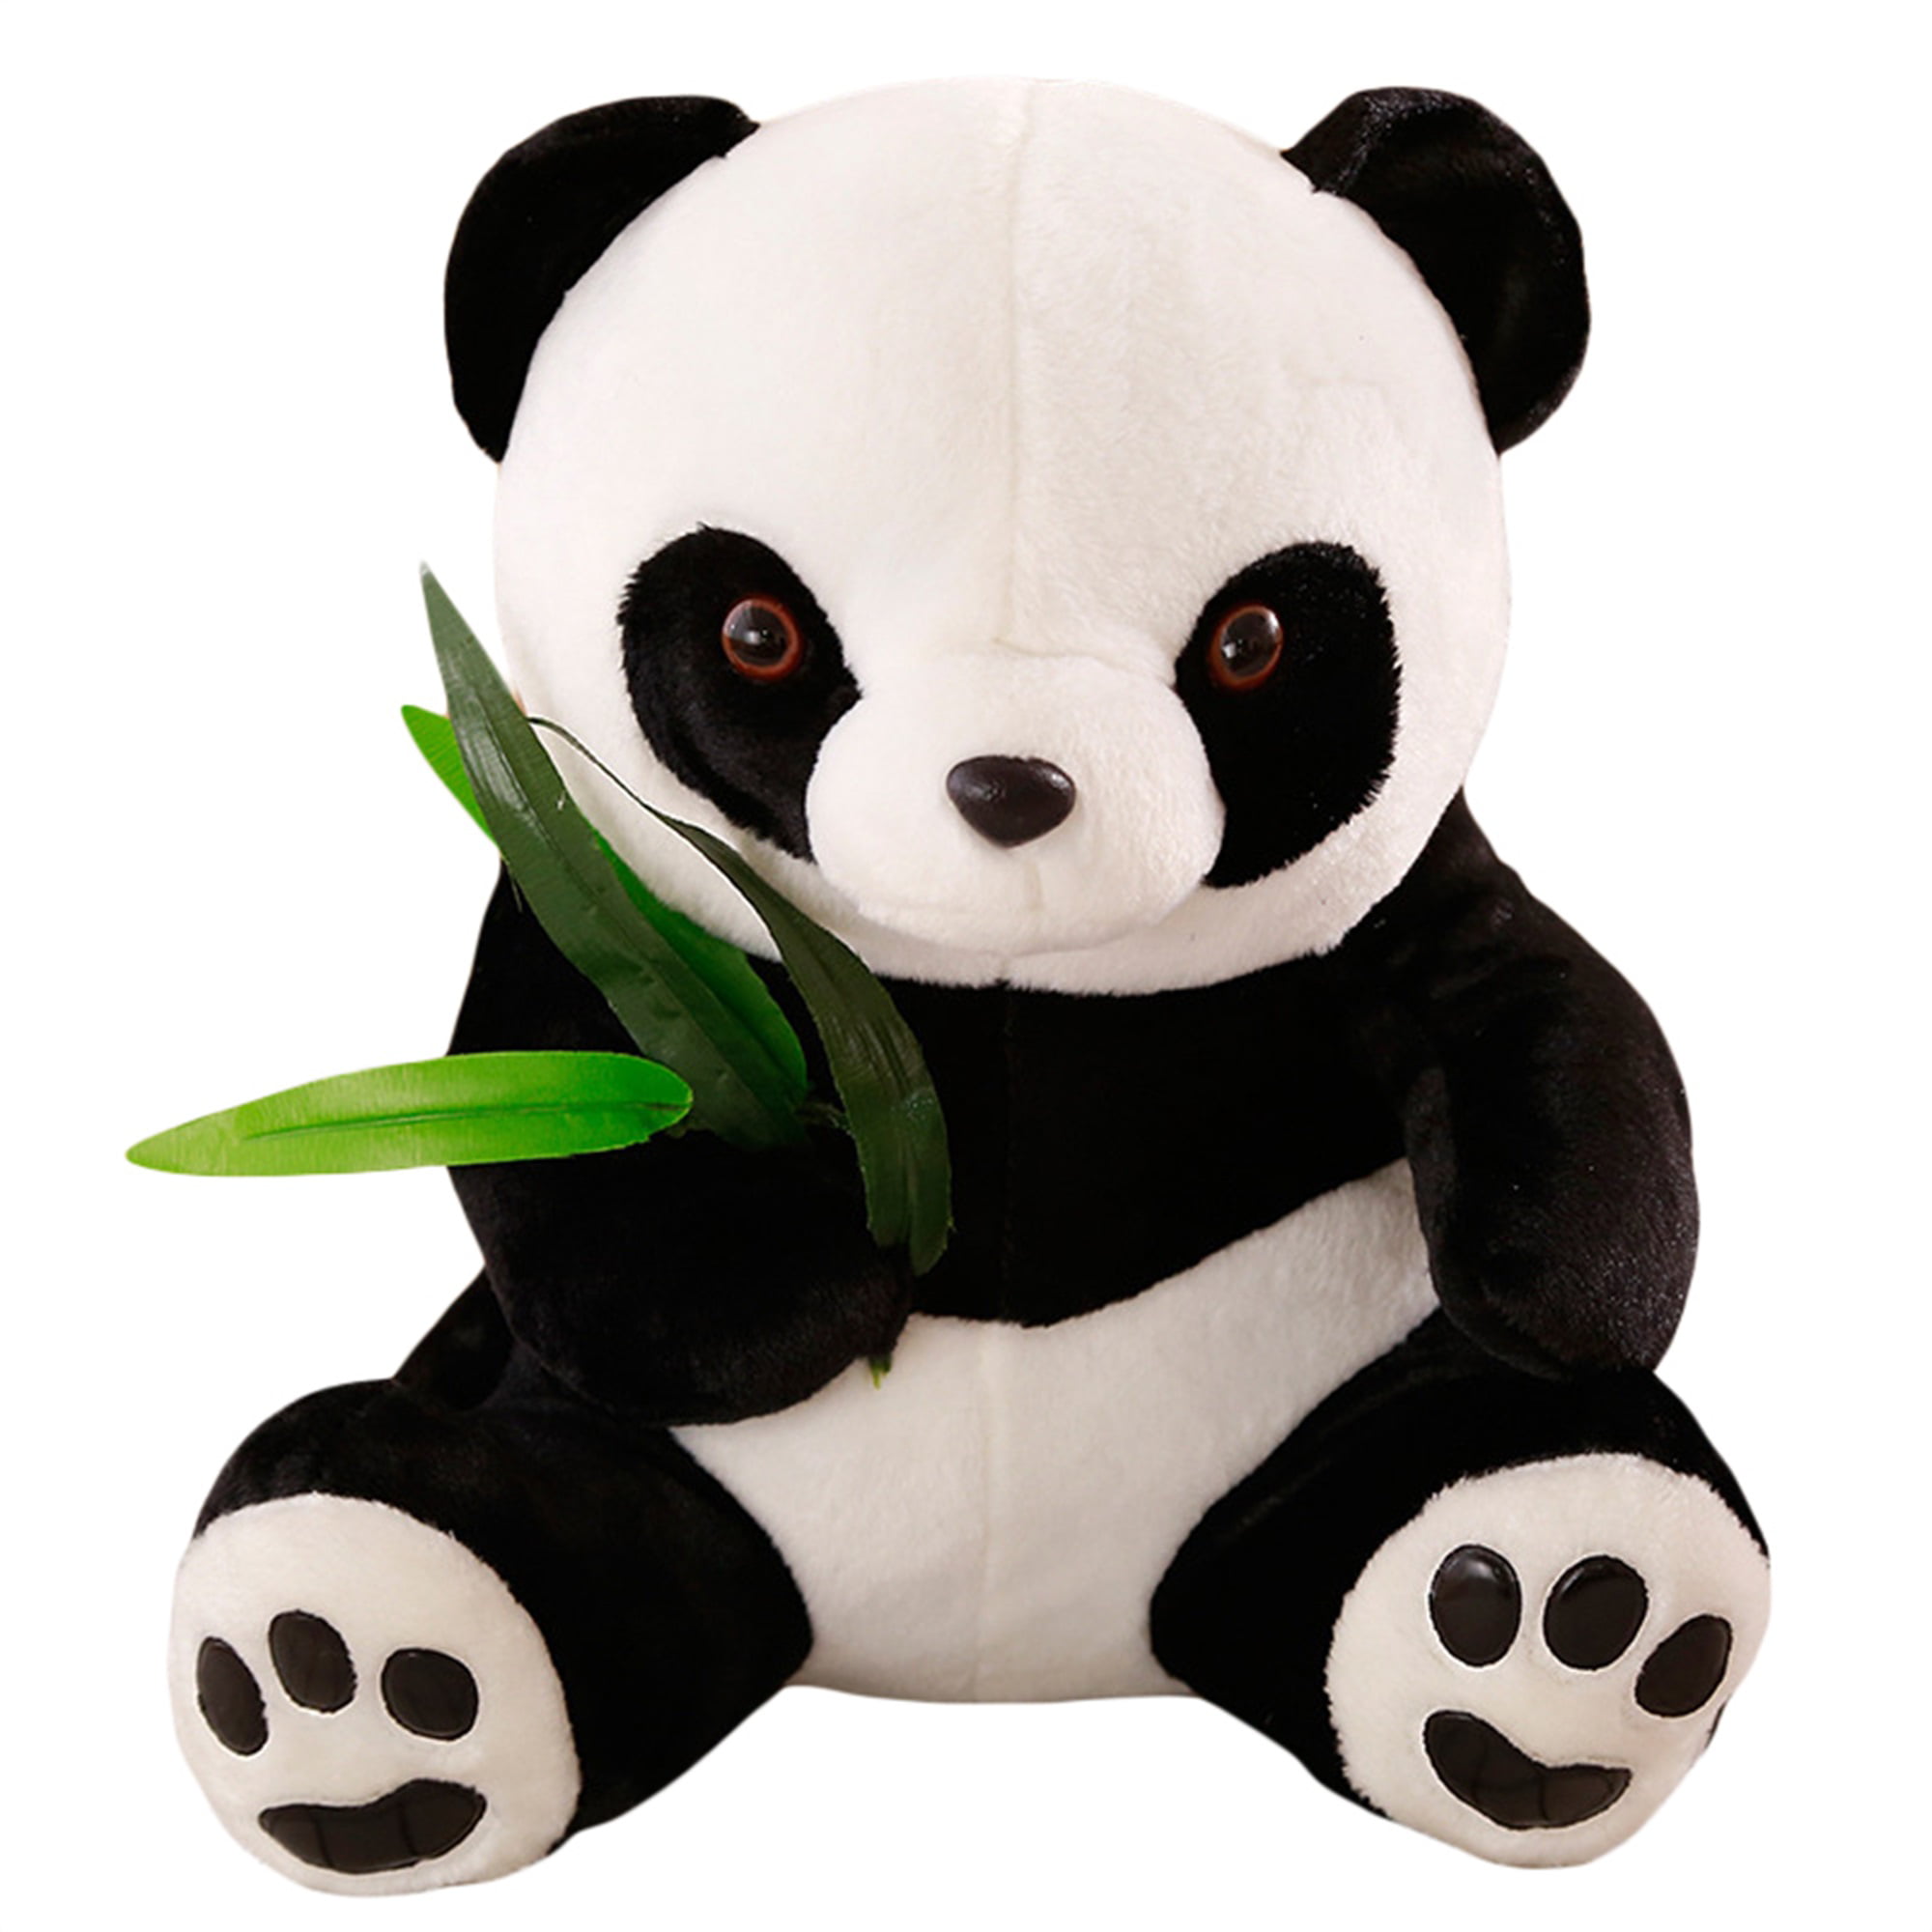 Stuffed Plush Doll Toy Animal Cute Panda Birthday Gift. New 30CM 11.81" HOT 